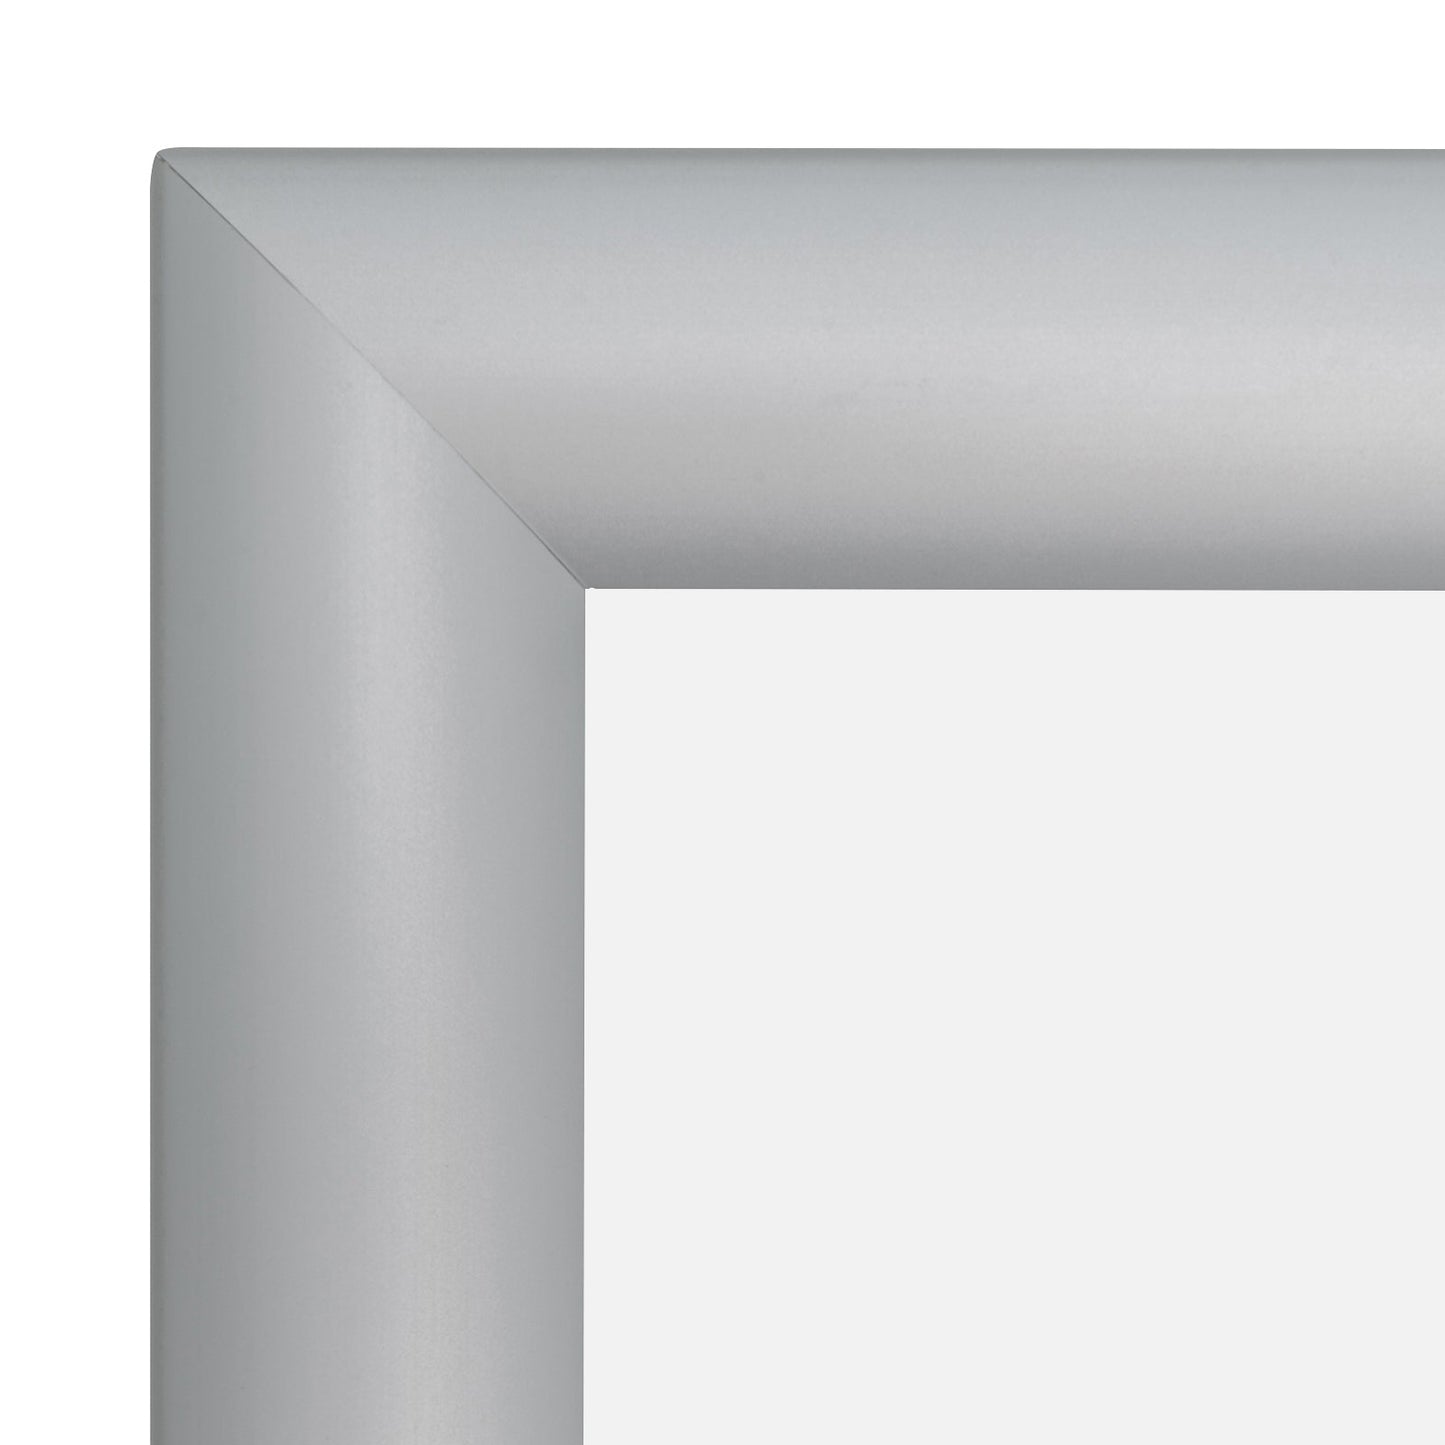 8.5x14 Silver SnapeZo® Snap Frame - 1.2" Profile - Snap Frames Direct